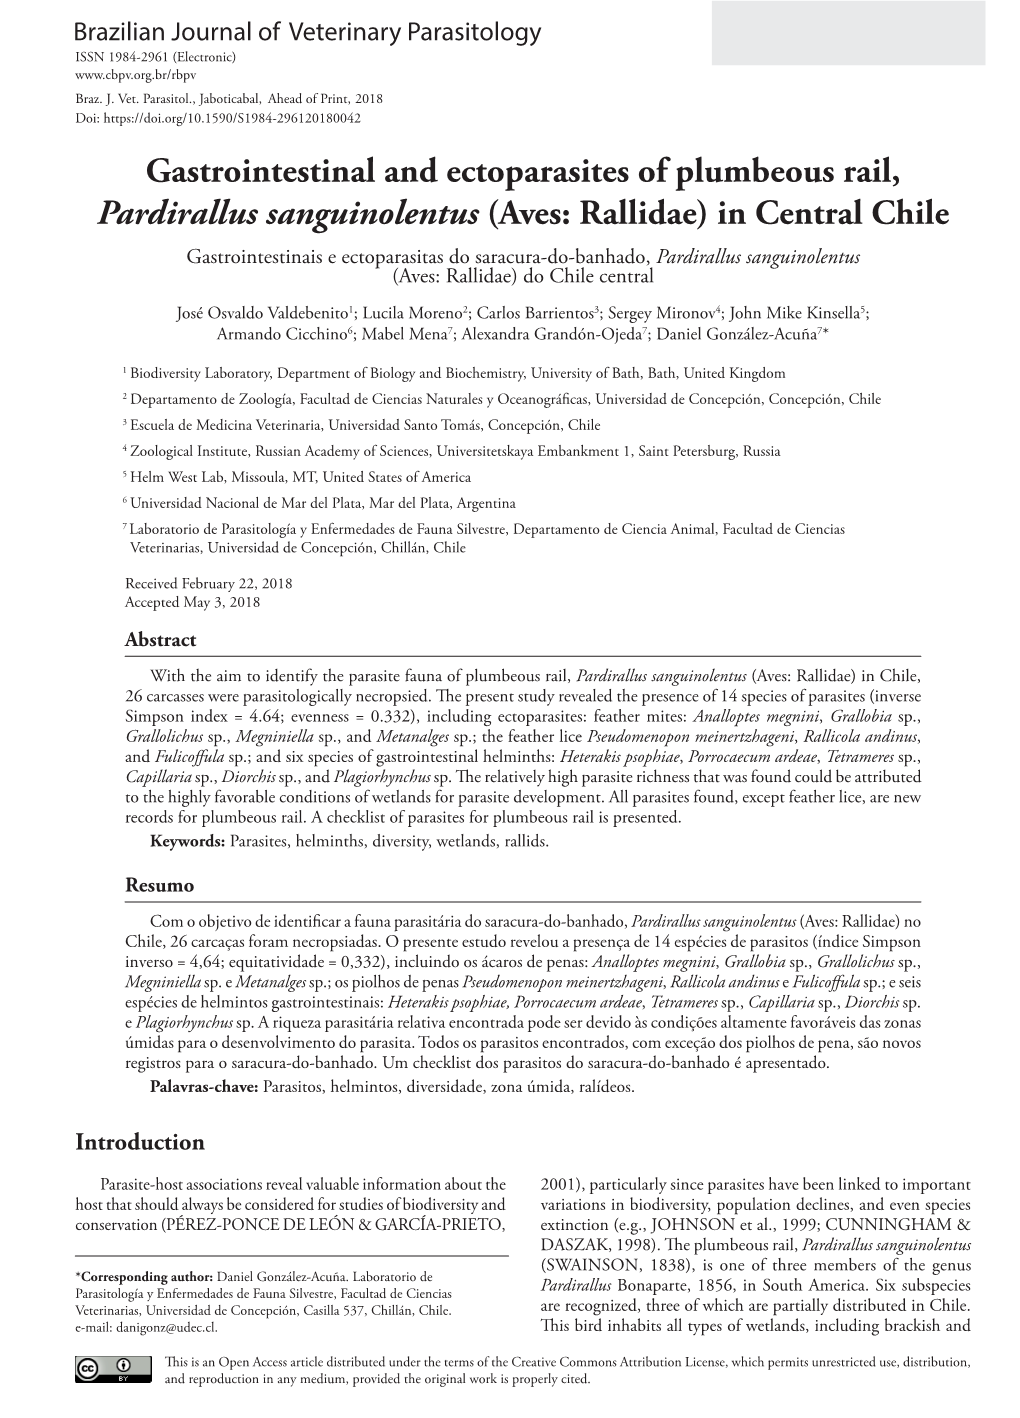 Gastrointestinal and Ectoparasites of Plumbeous Rail, Pardirallus